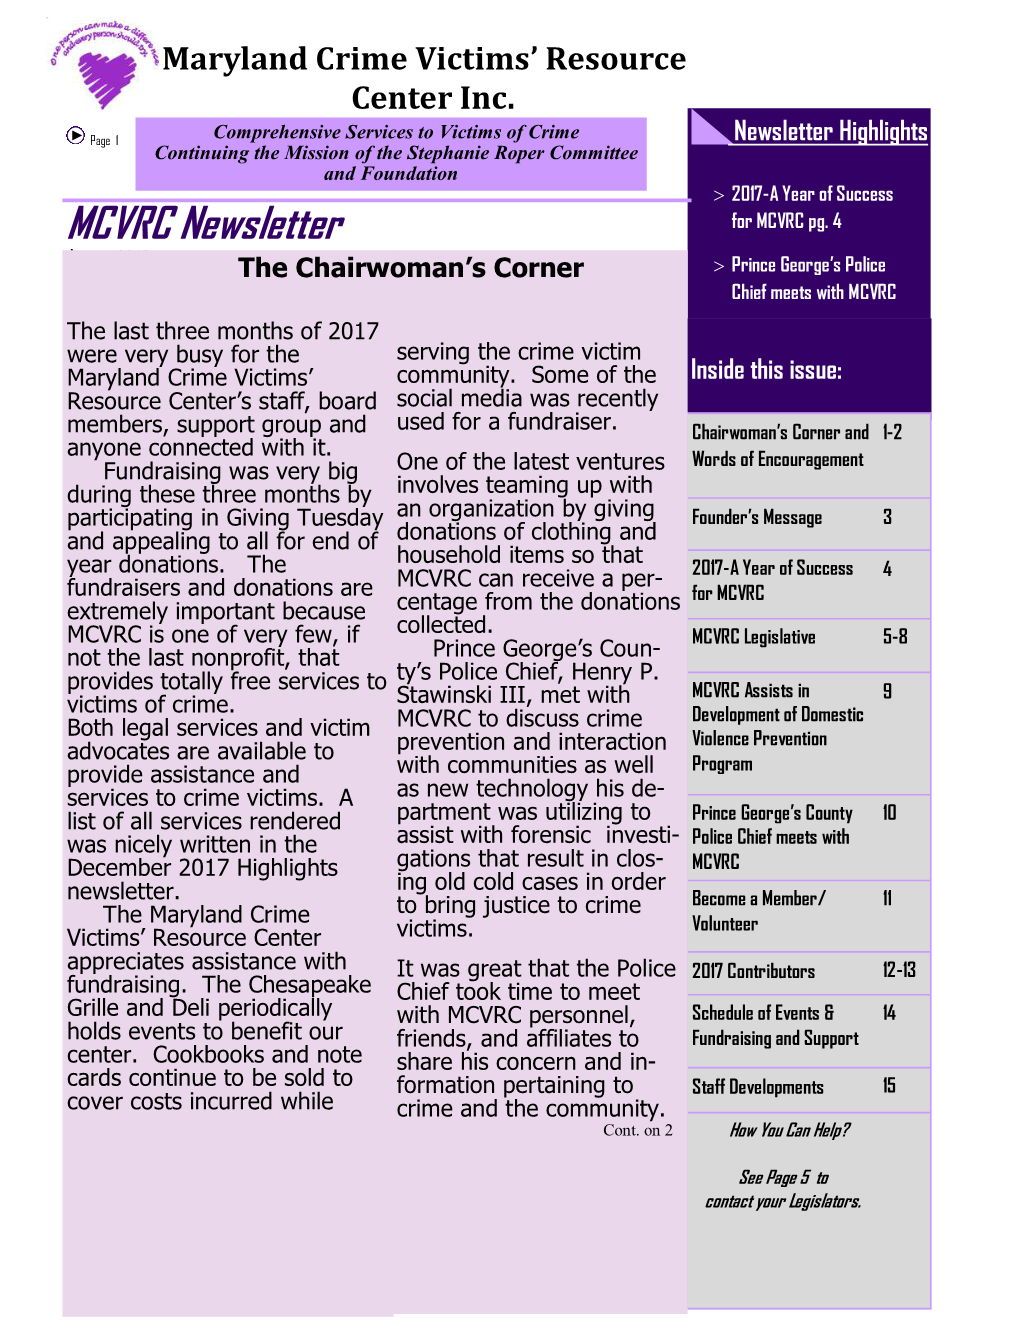 MCVRC Newsletter for MCVRC Pg